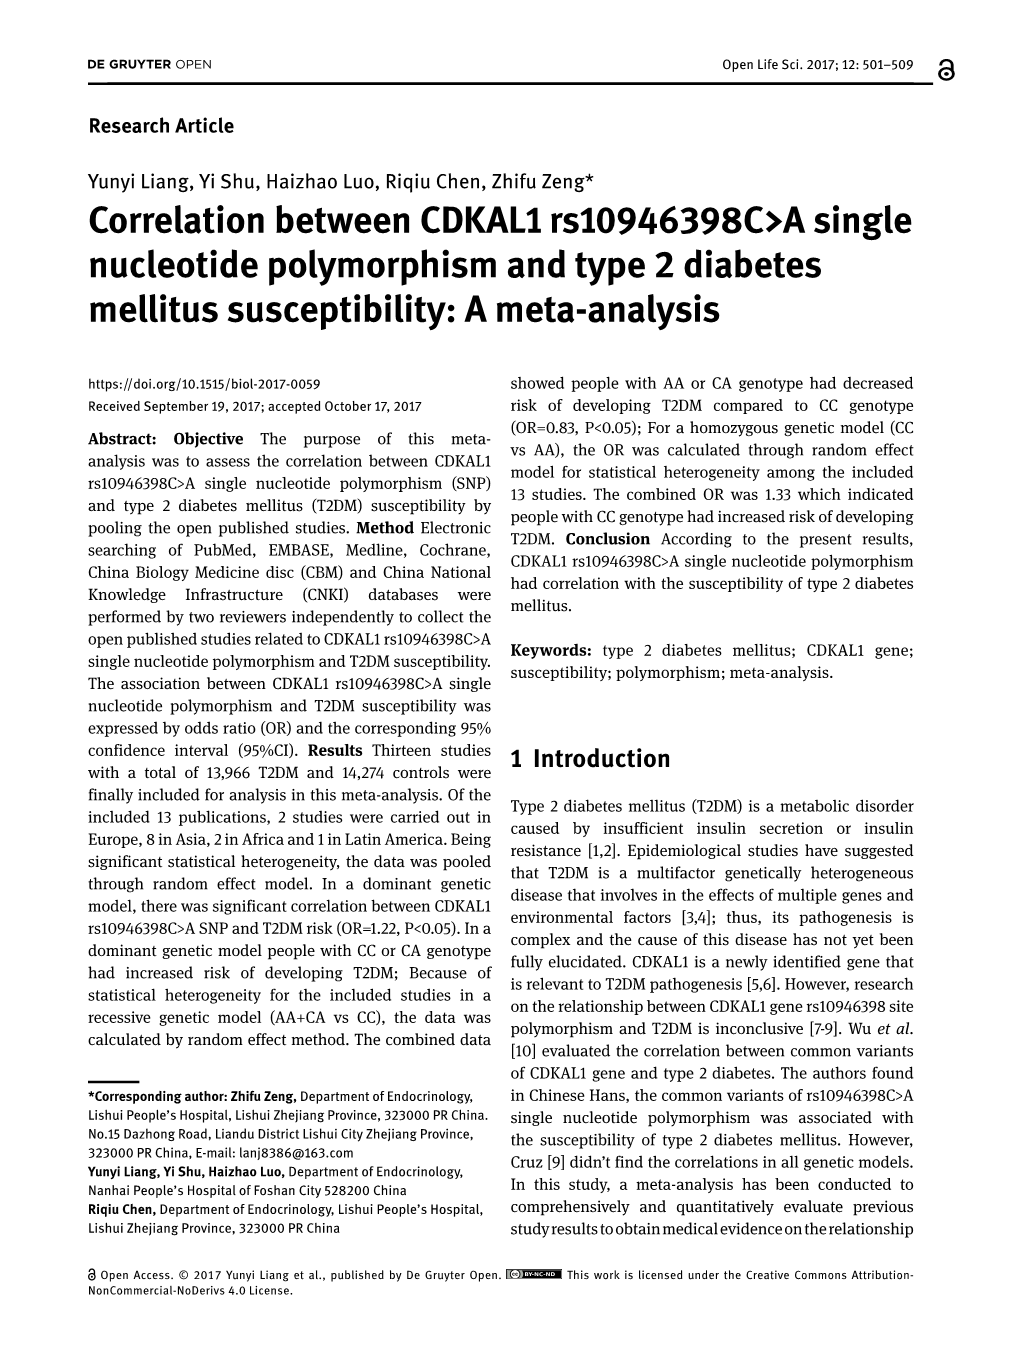 Correlation Between CDKAL1 Rs10946398c&gt;A Single Nucleotide